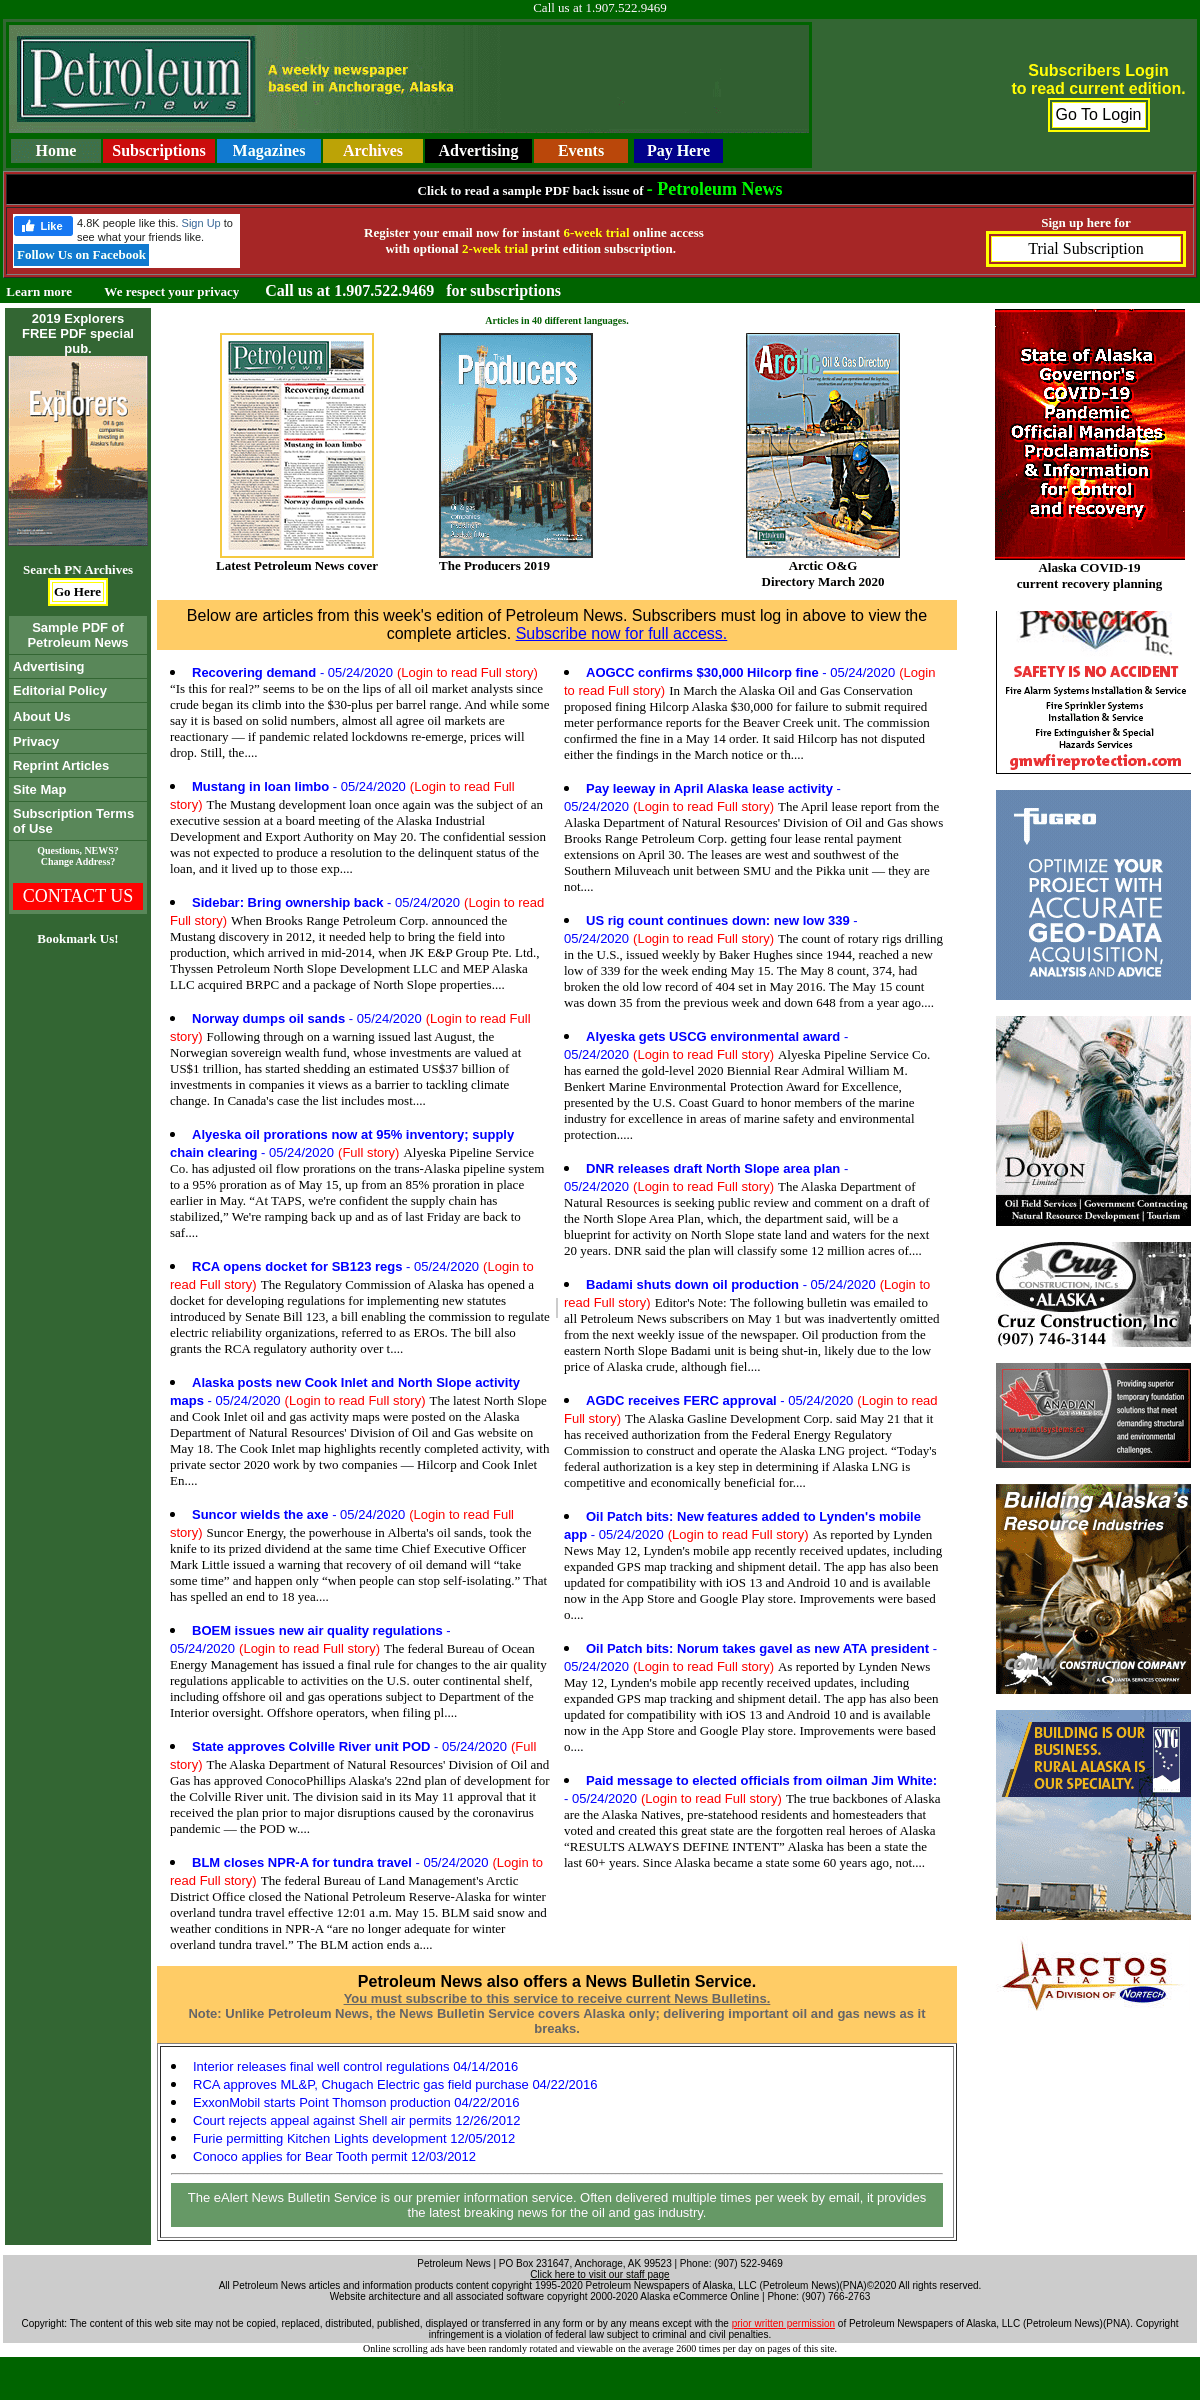 A complete backup of petroleumnews.com